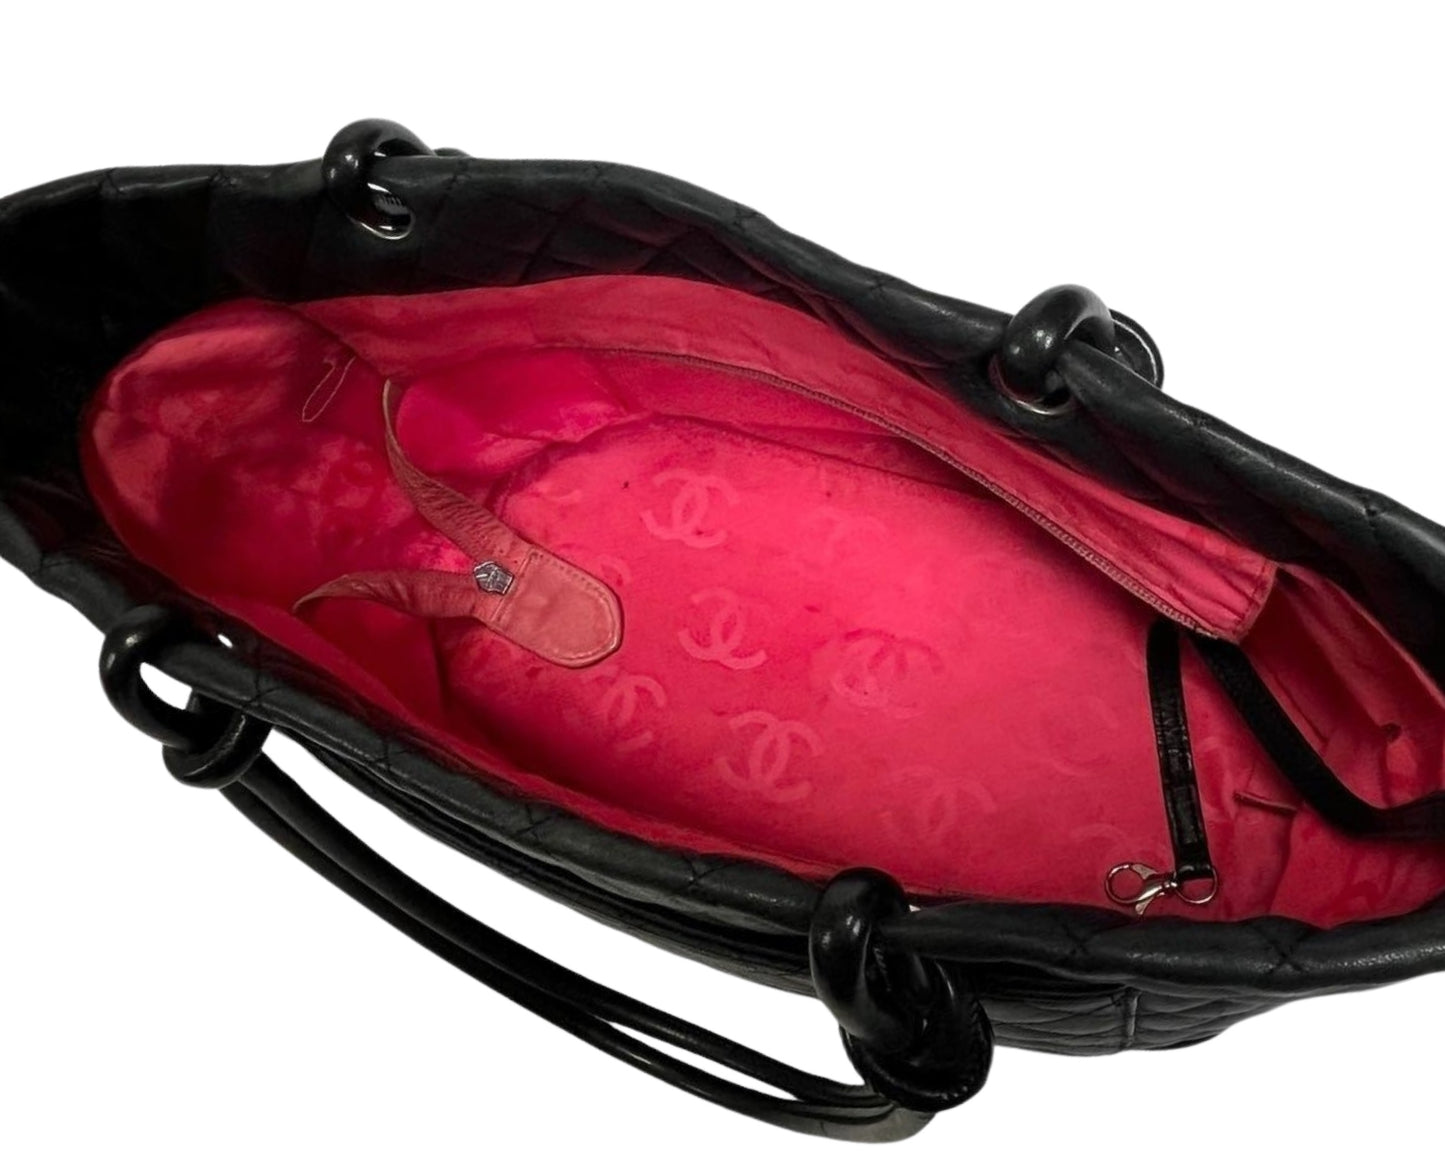 Chanel Cambon Tote Shoulder Bag Handbag Black Quilted Leather White